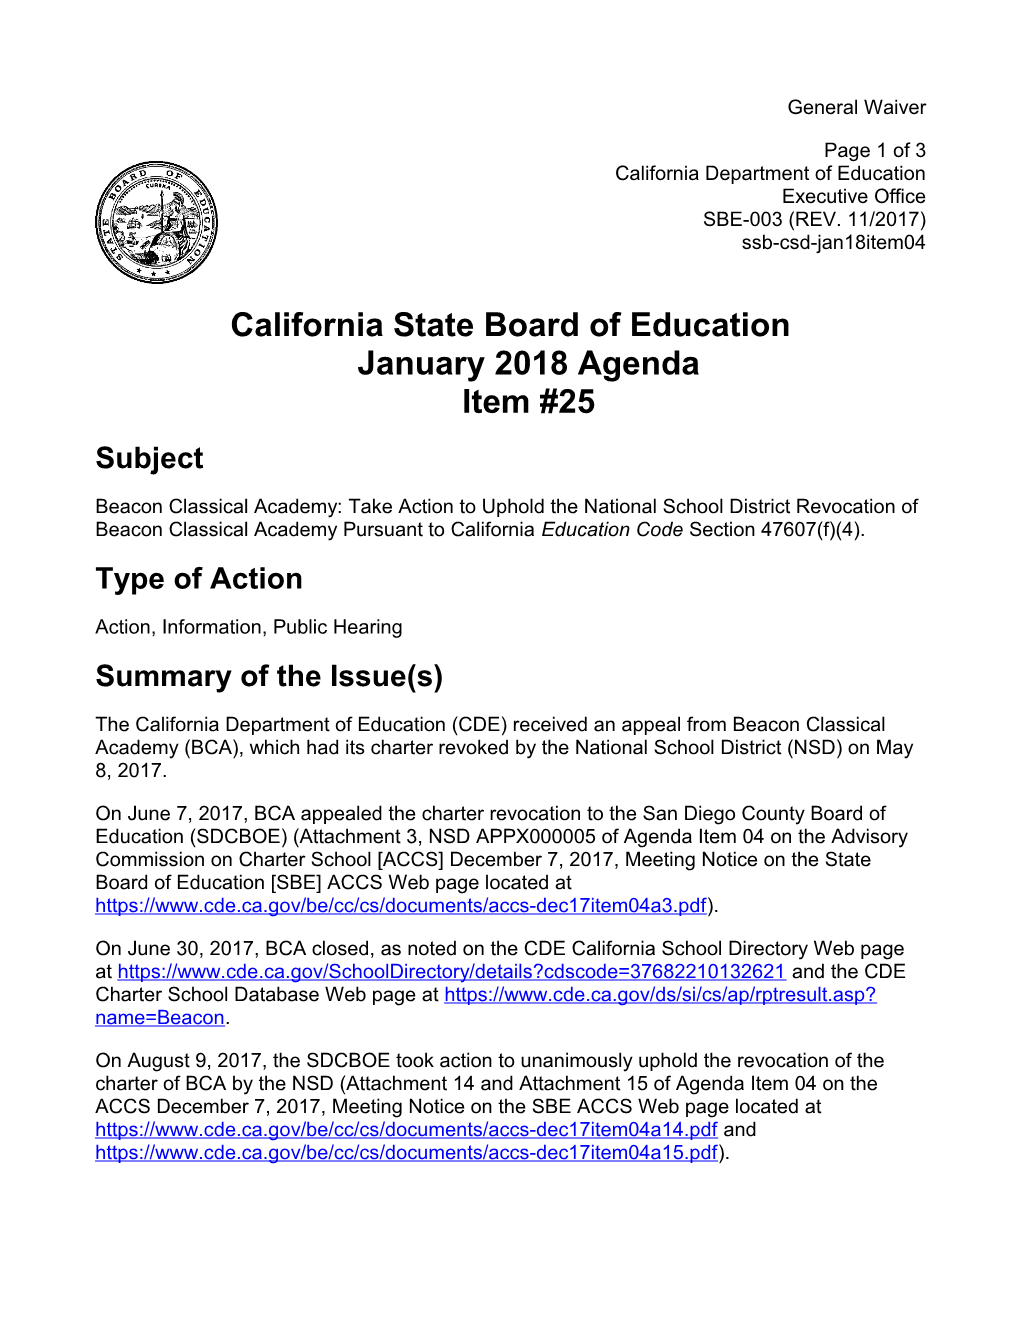 January 2018 Agenda Item 25 - Meeting Agendas (CA State Board of Education)